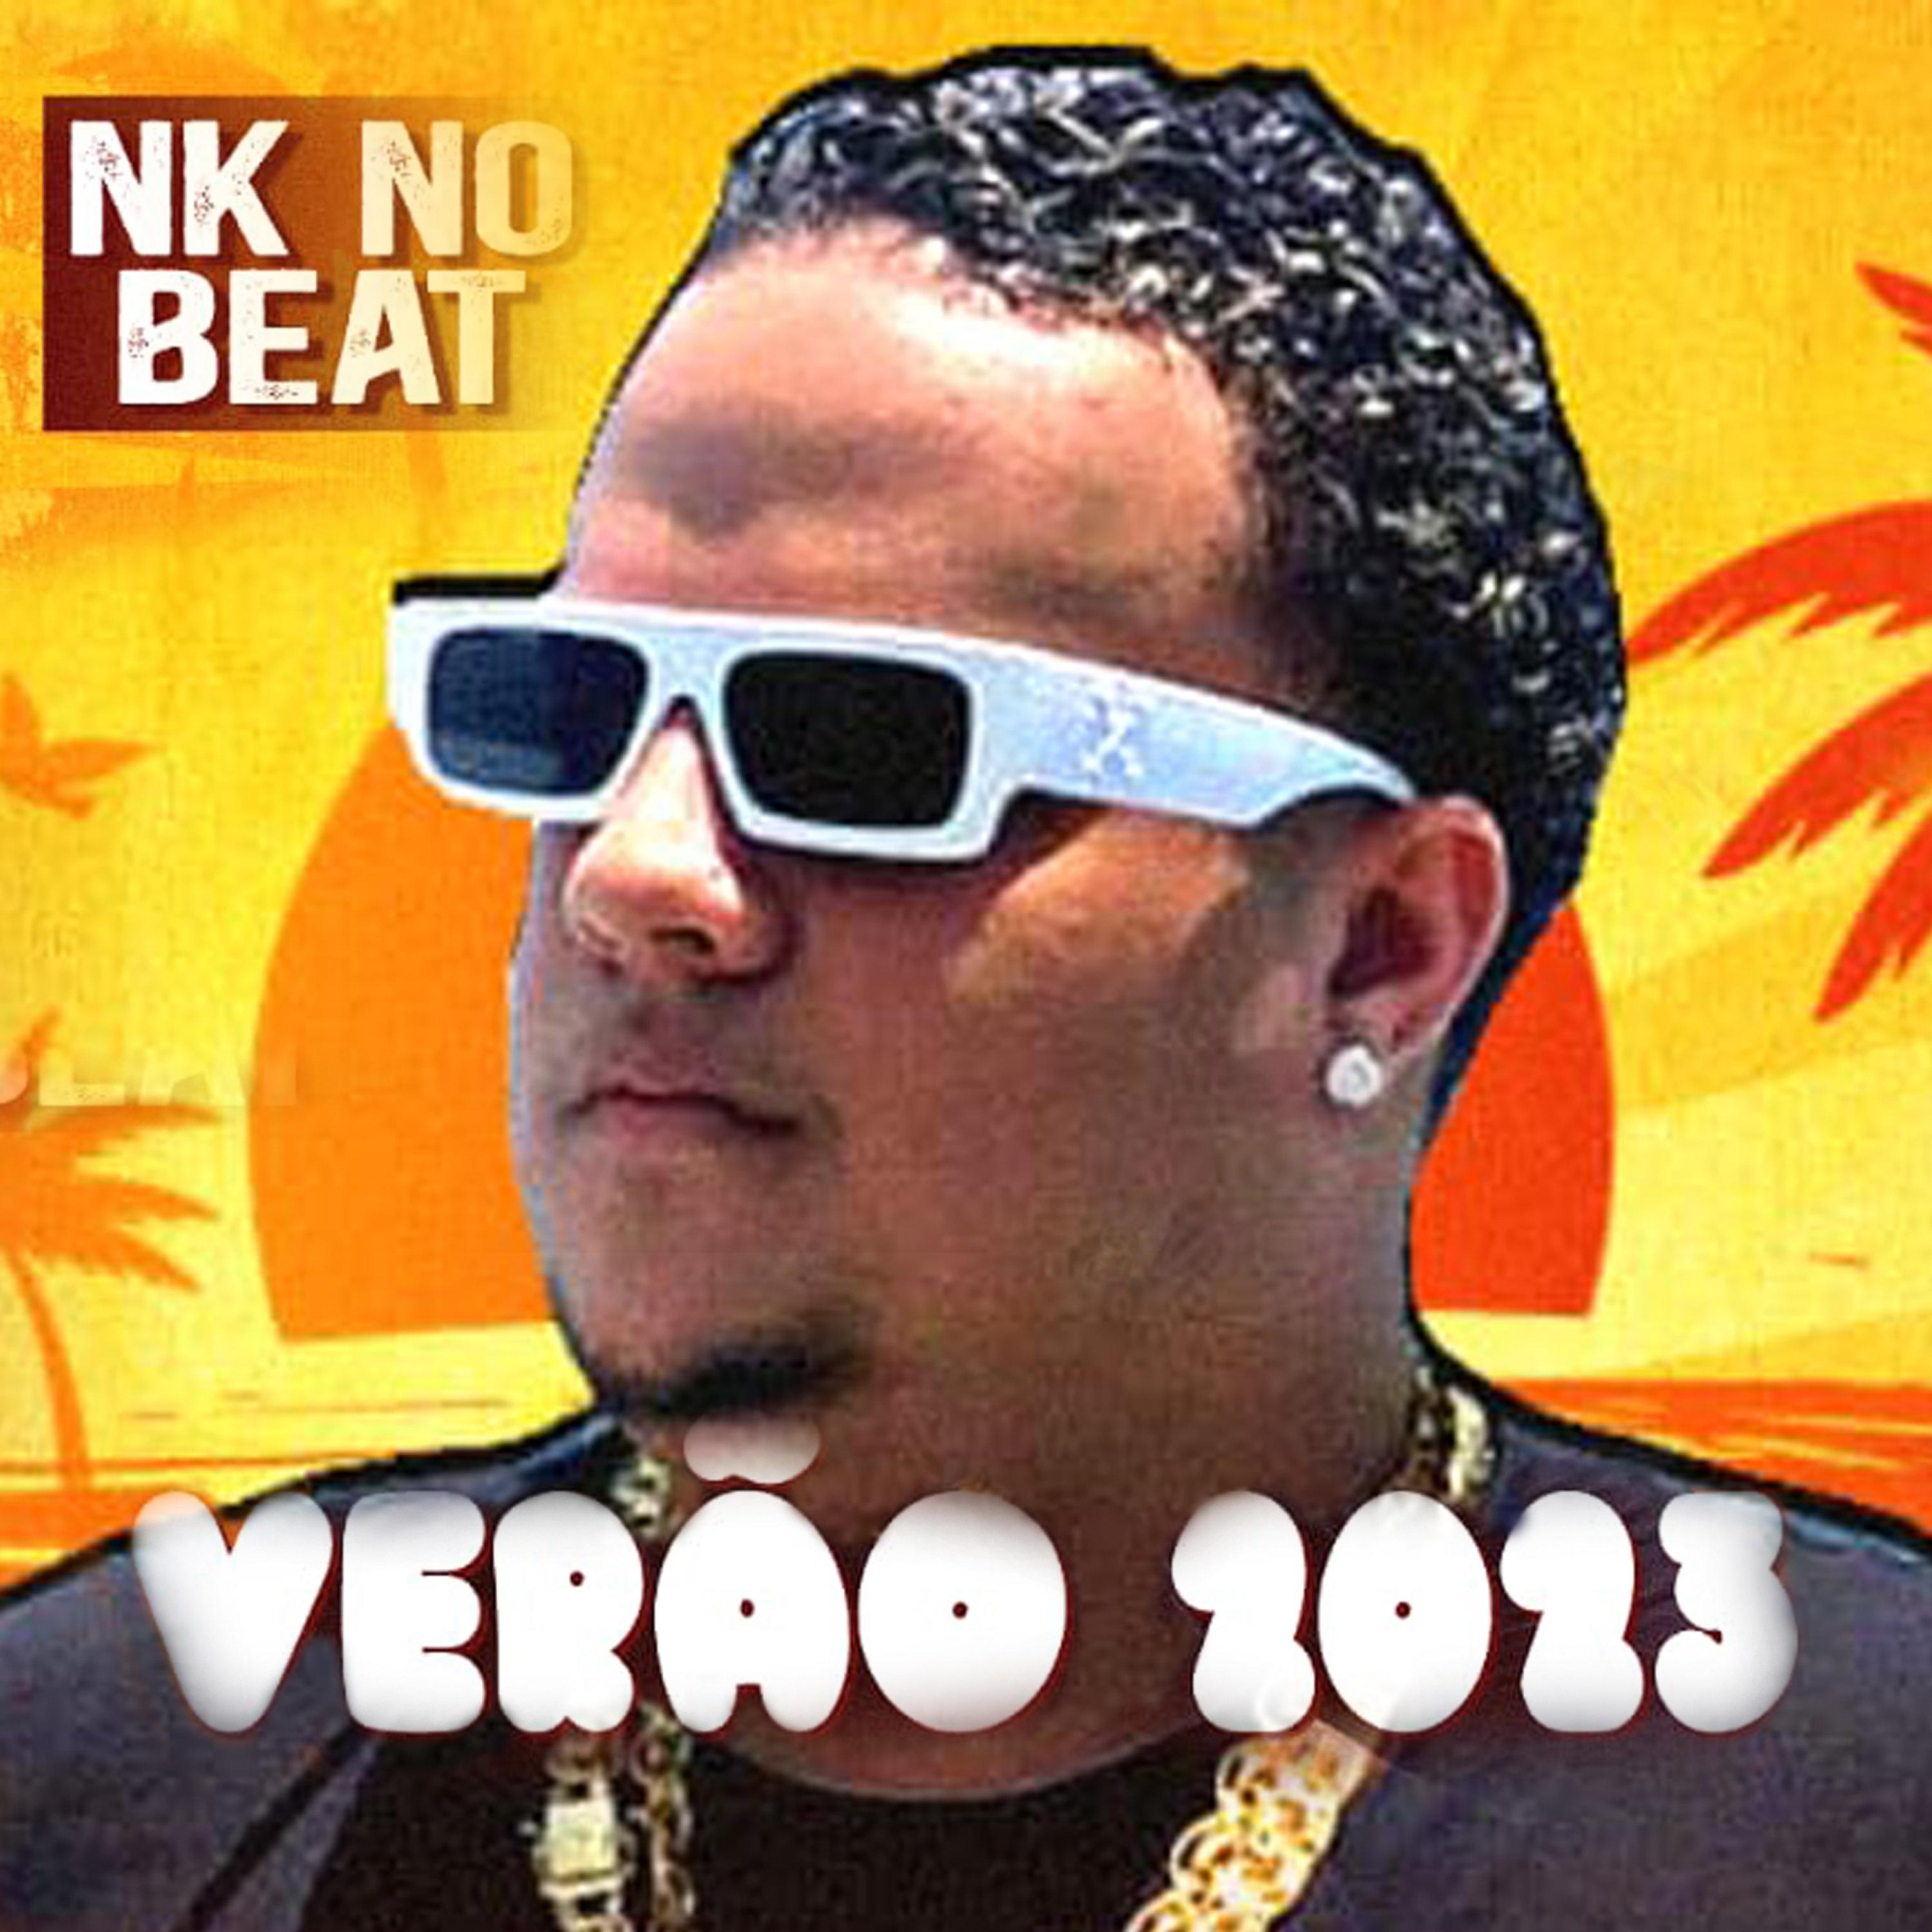 NK no Beat - F1 na Quebrada (feat. Mc Abalo)